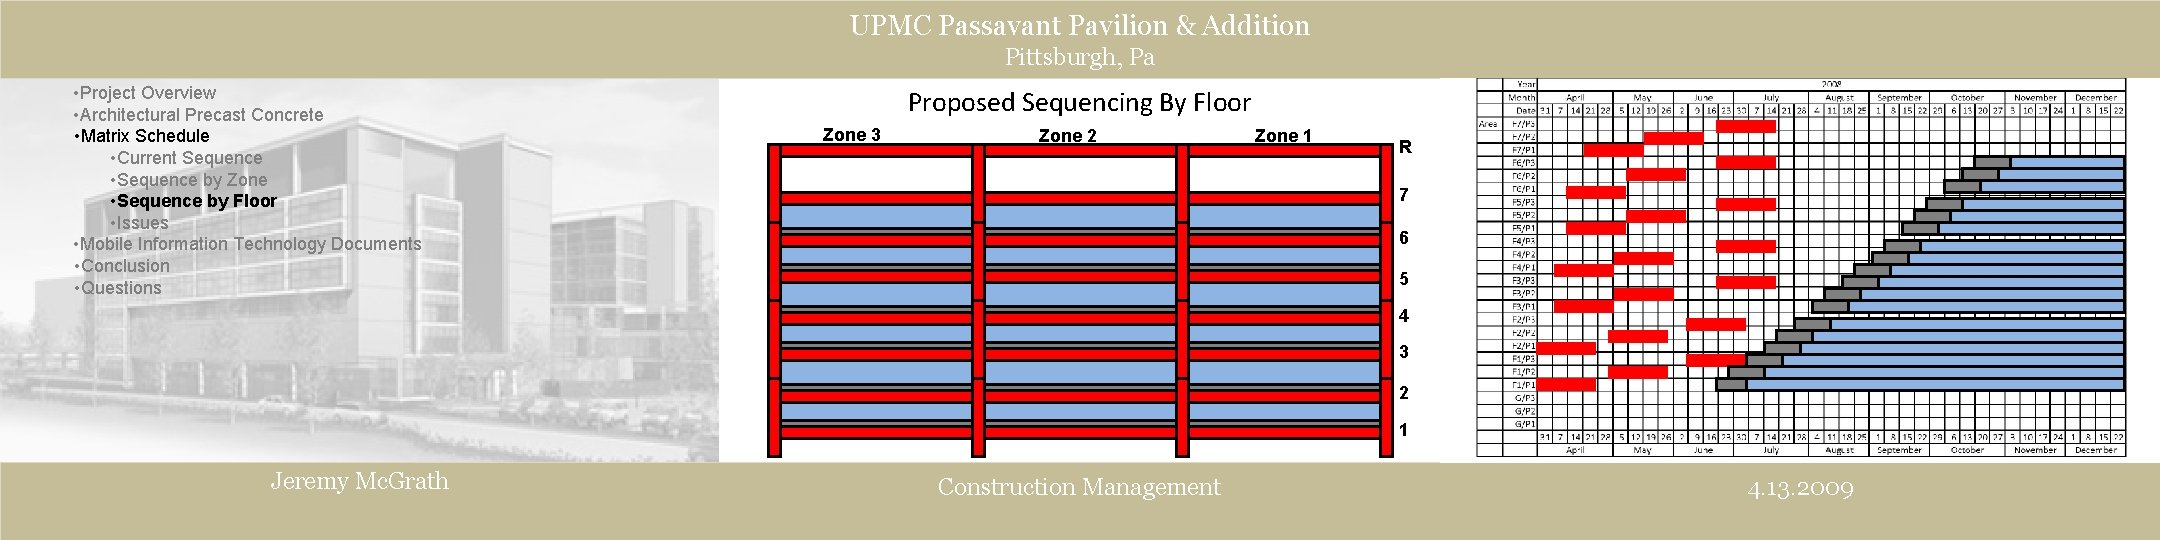 UPMC Passavant Pavilion & Addition Pittsburgh, Pa • Project Overview • Architectural Precast Concrete